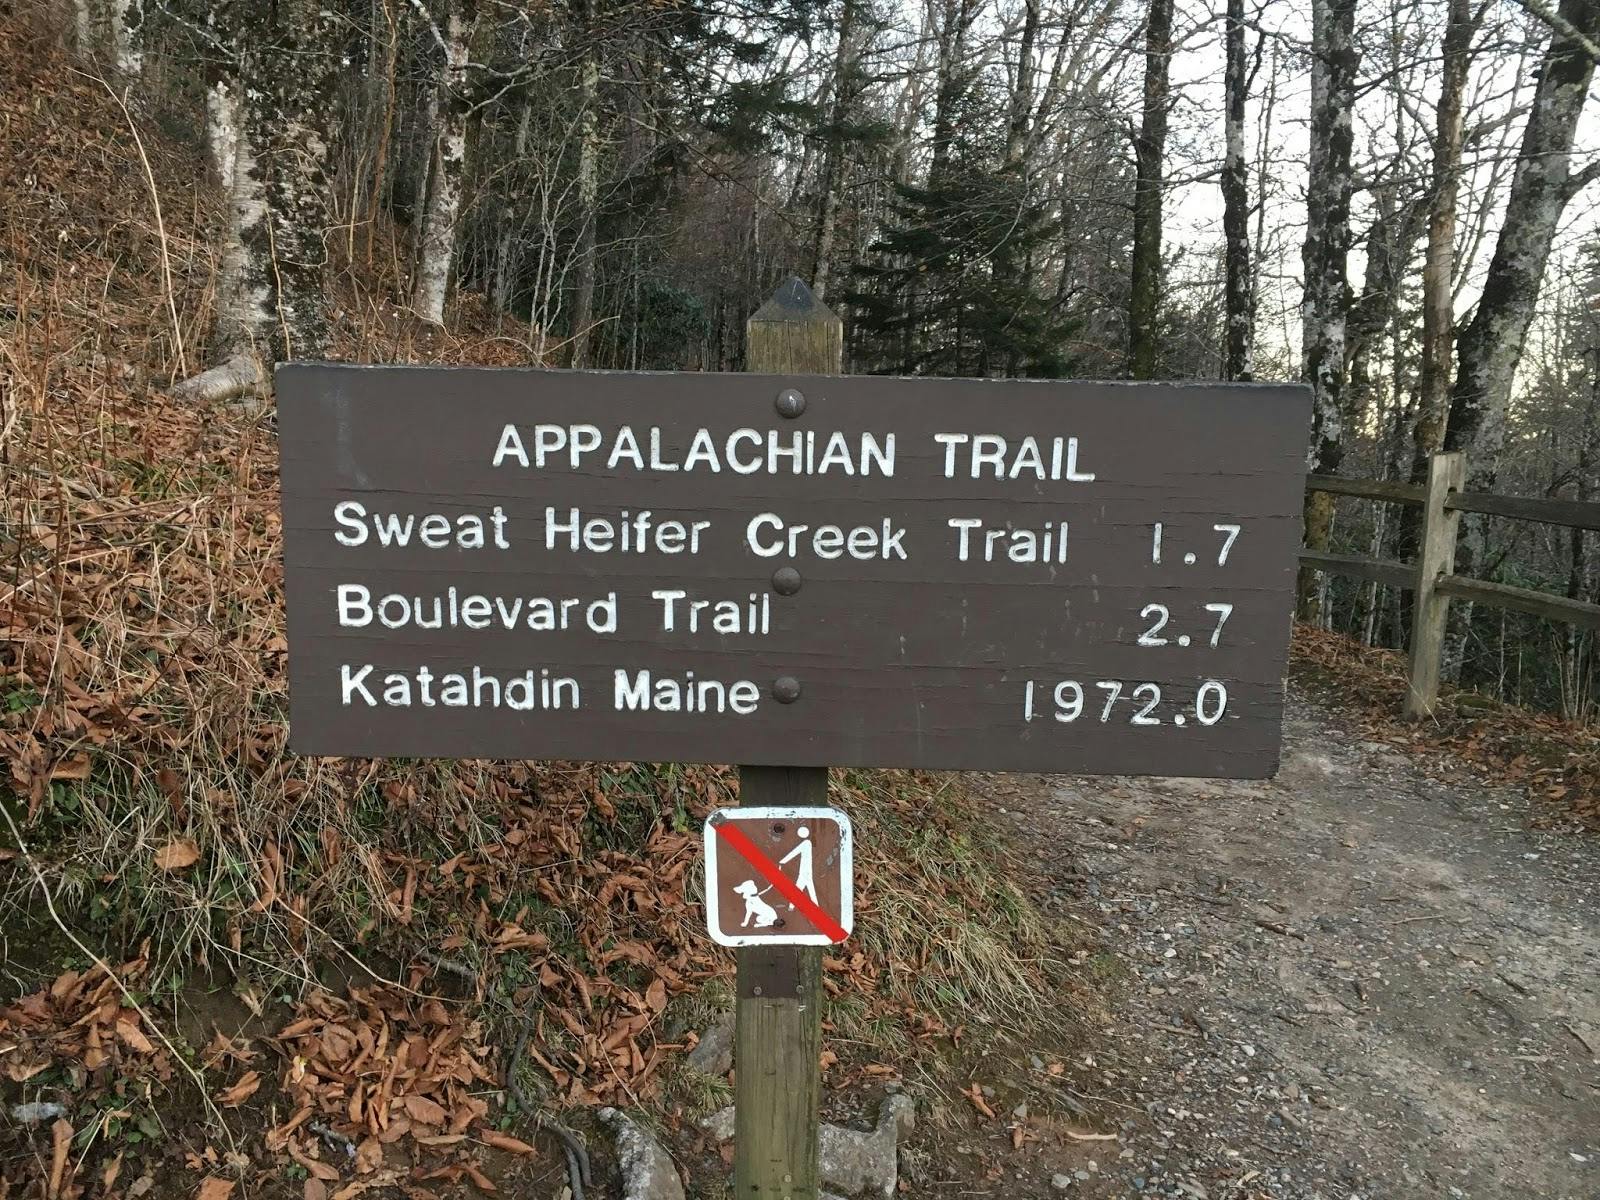 A trail-side sign that reads: "Appalachian Trail. Sweat Heifer Creek Trail - 1.7. Boulevard Trail - 2.7. Katahdin Maine - 1972.0. 